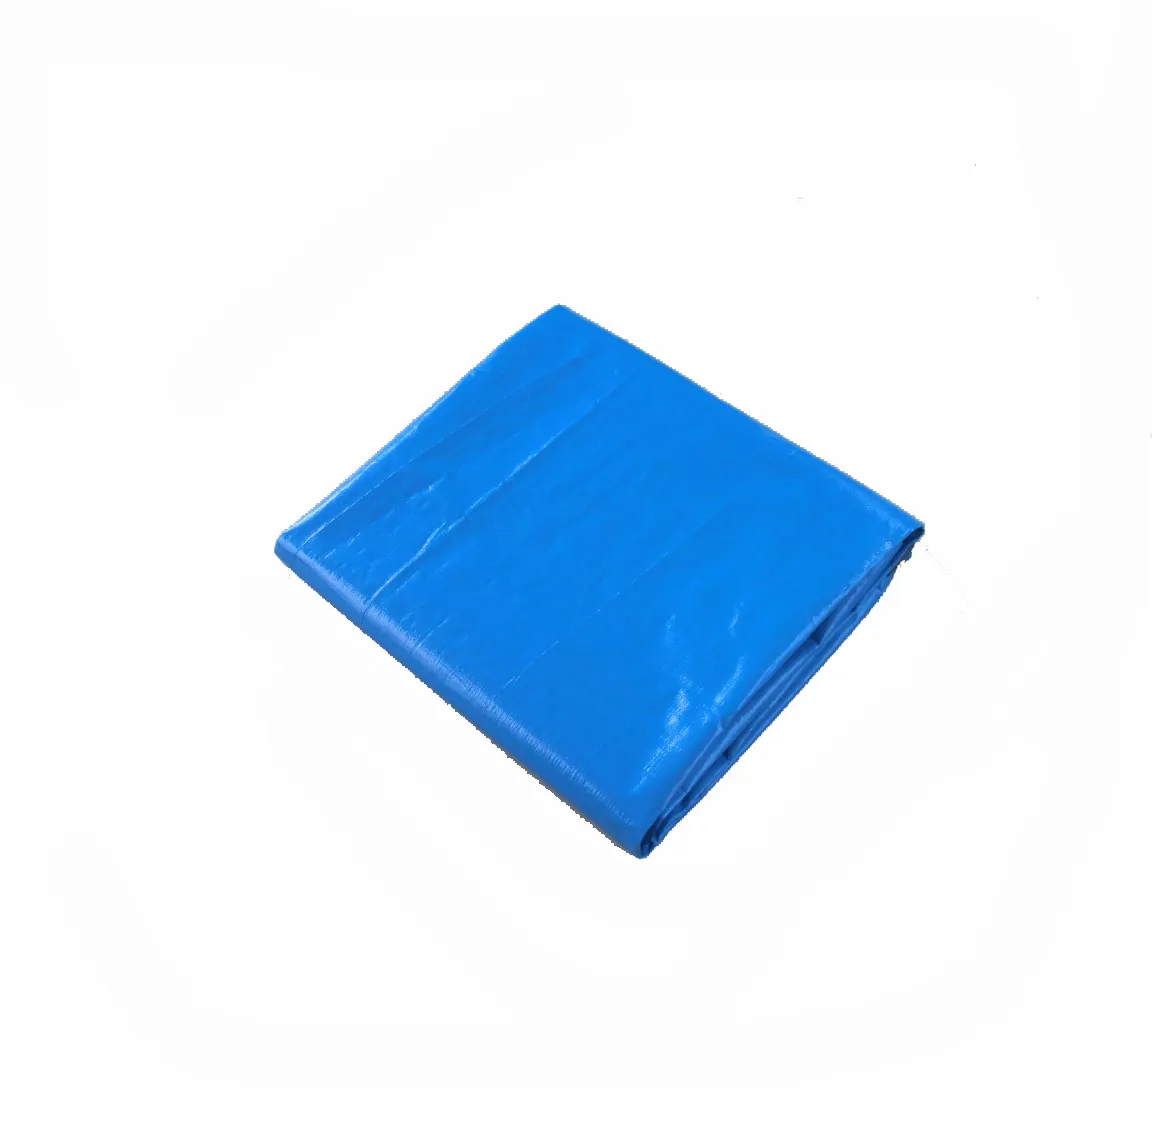 Hot selling Blue 100 GSM Lona PE Tarpaulin PE Sheet Poly Tarp Cover For Things Cover